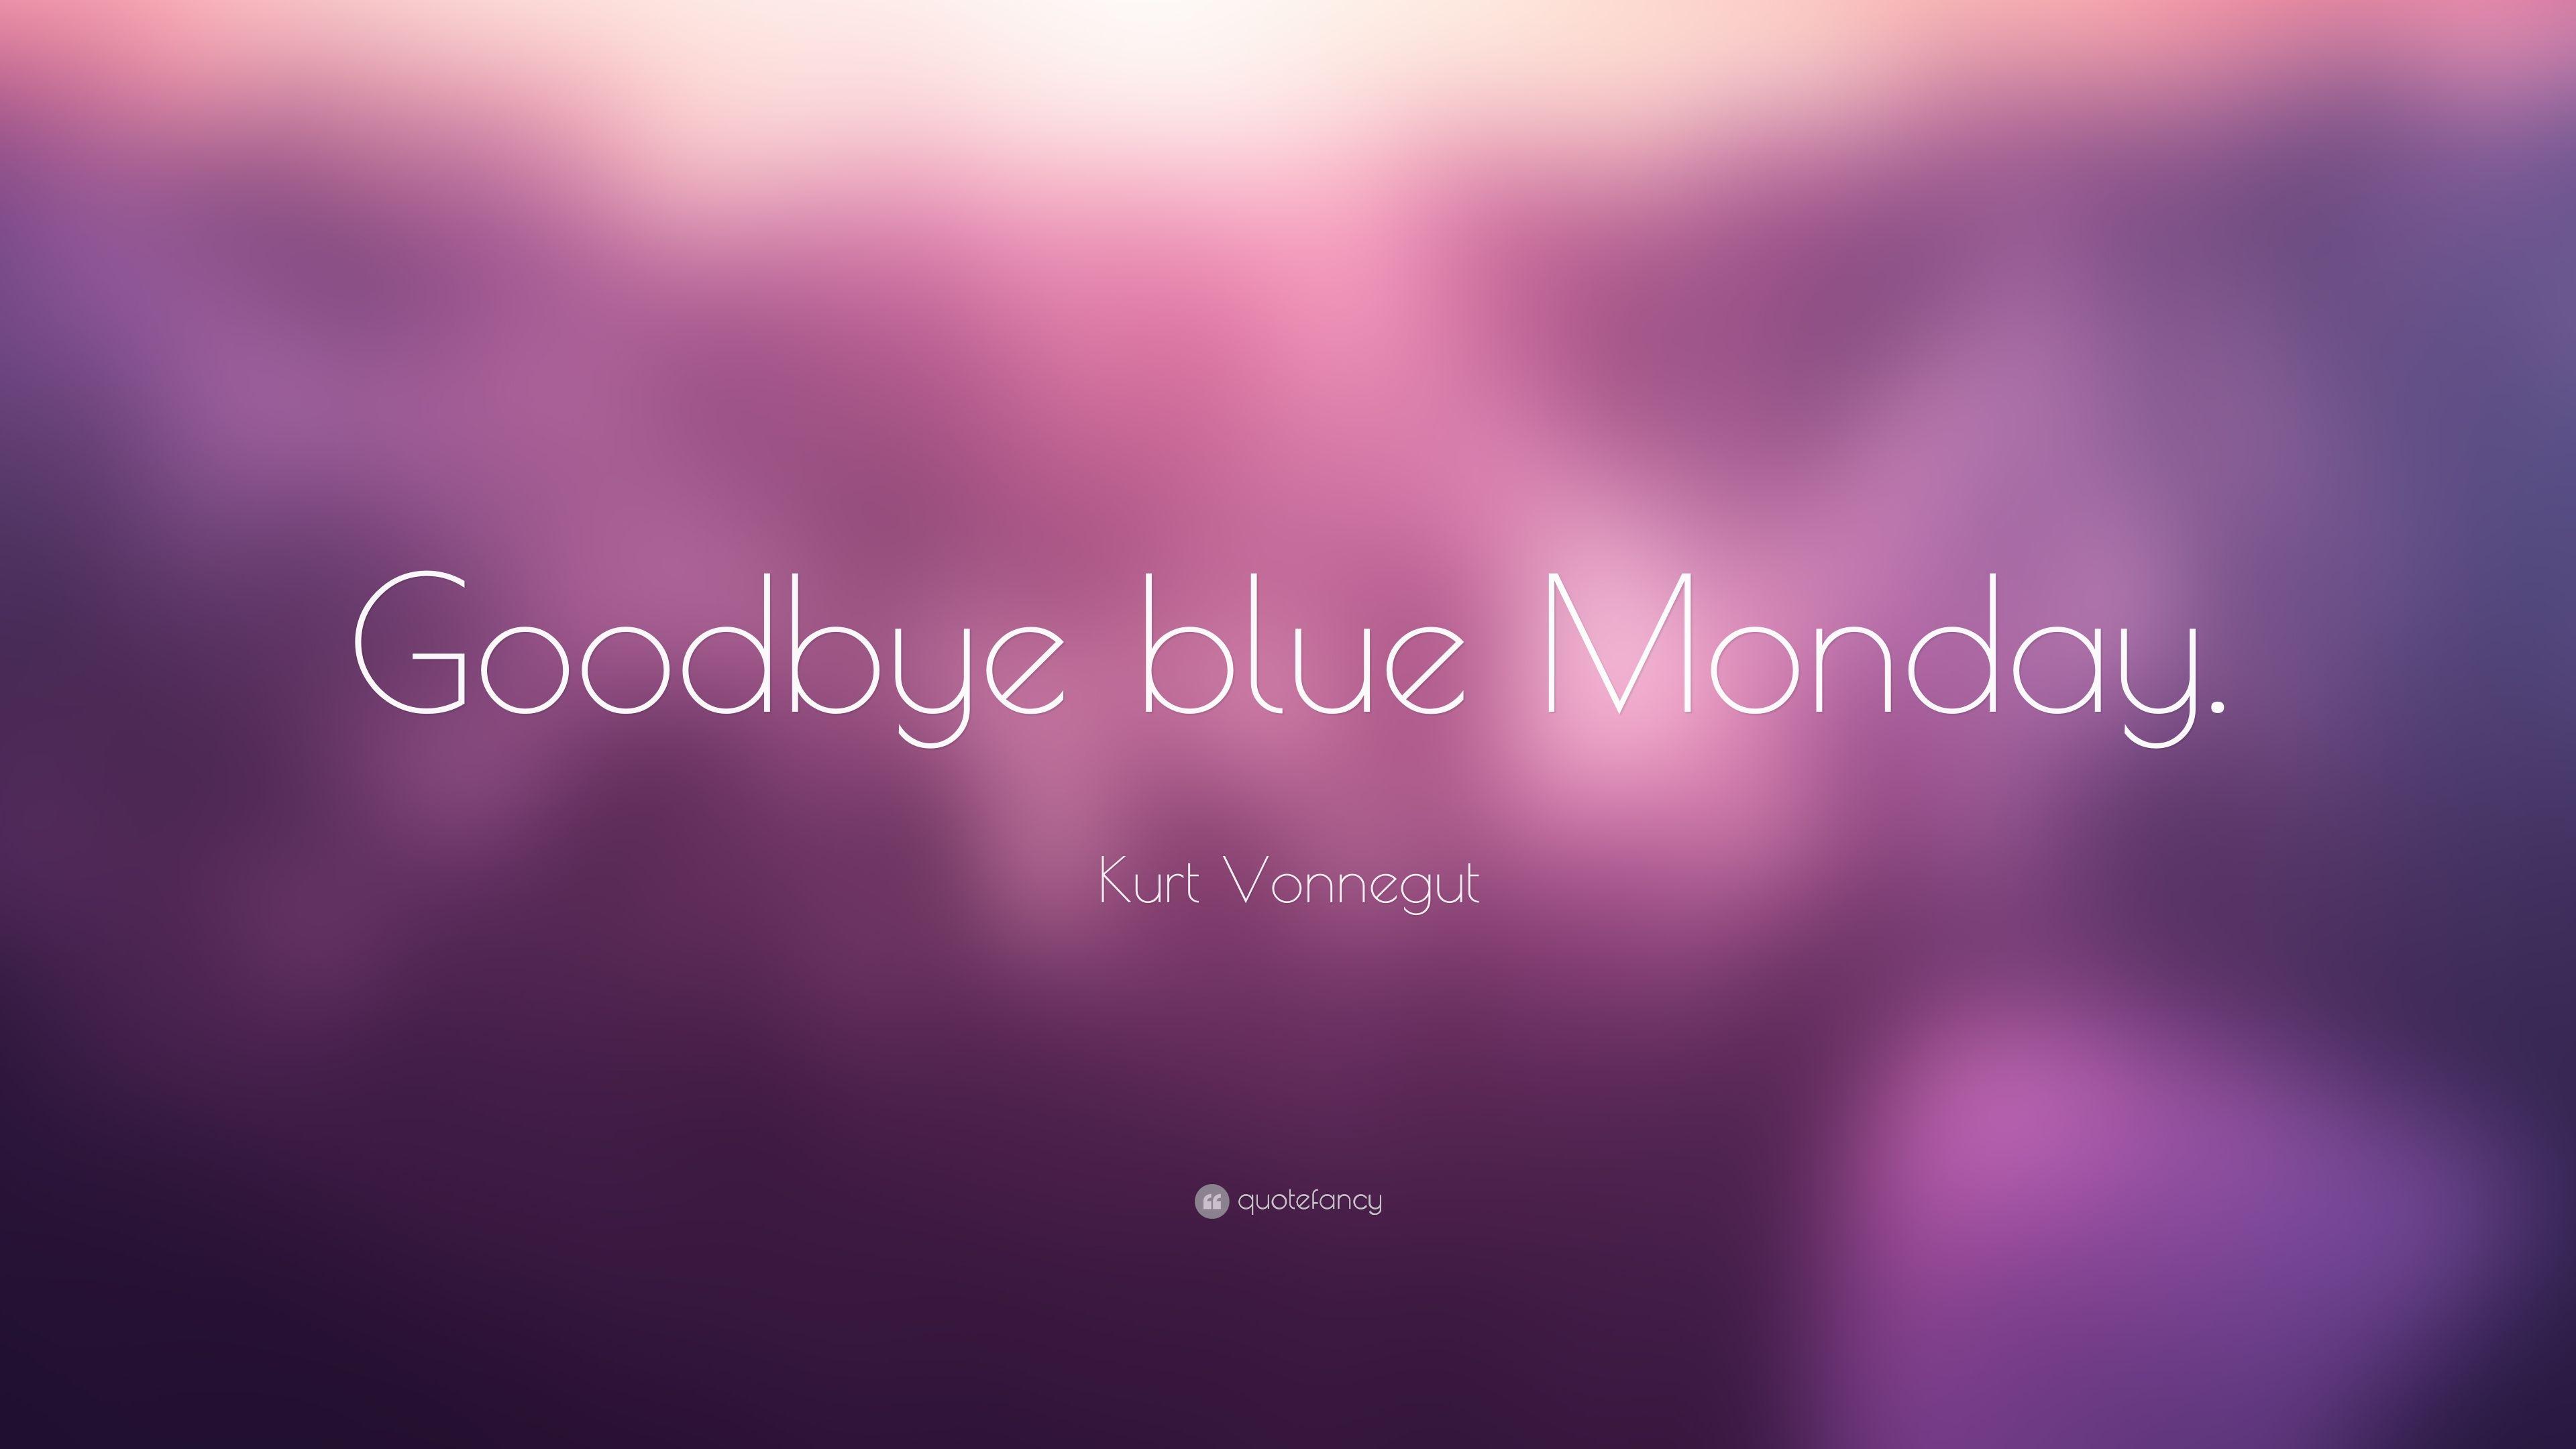 Kurt Vonnegut Quote: “Goodbye blue Monday.” 9 wallpaper